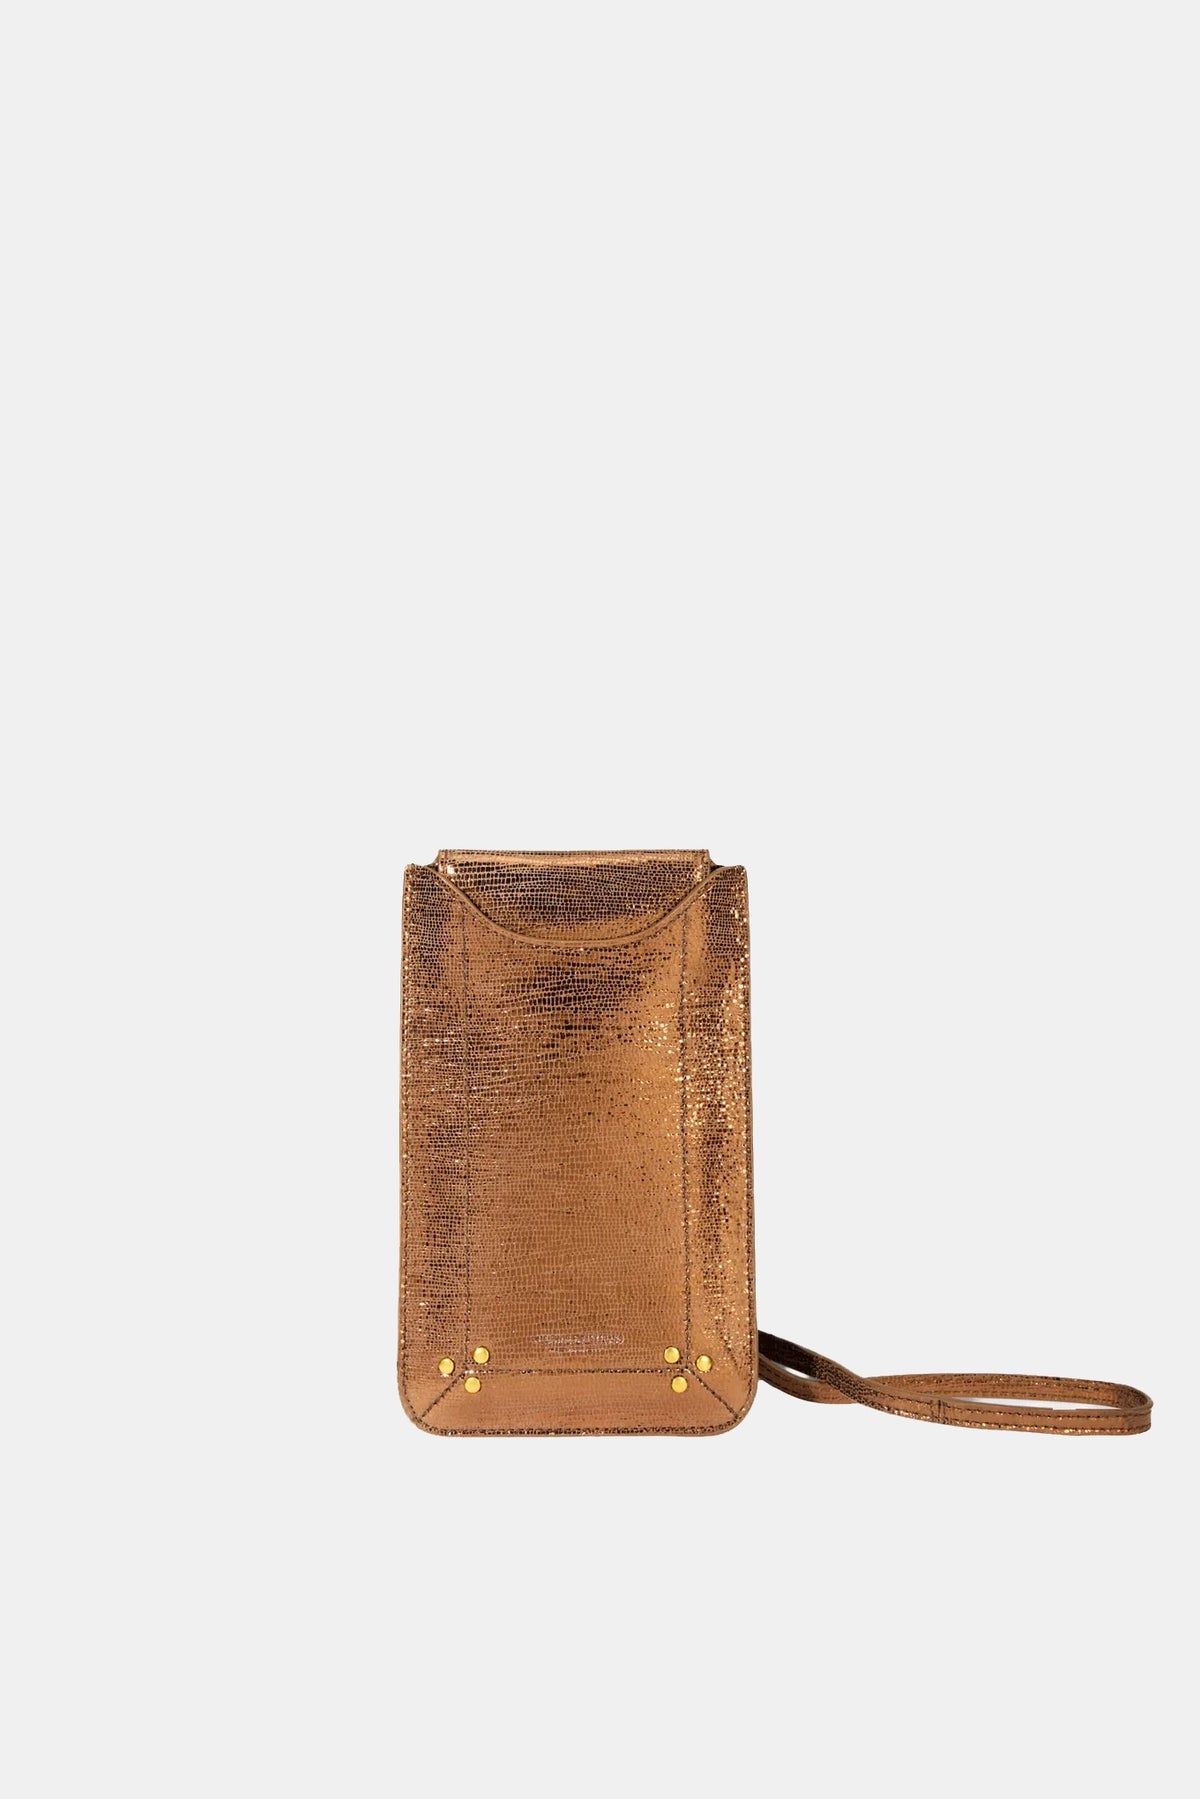 Jerôme Dreyfuss Étui Mobile Lamé Bronze Goatskin Bag